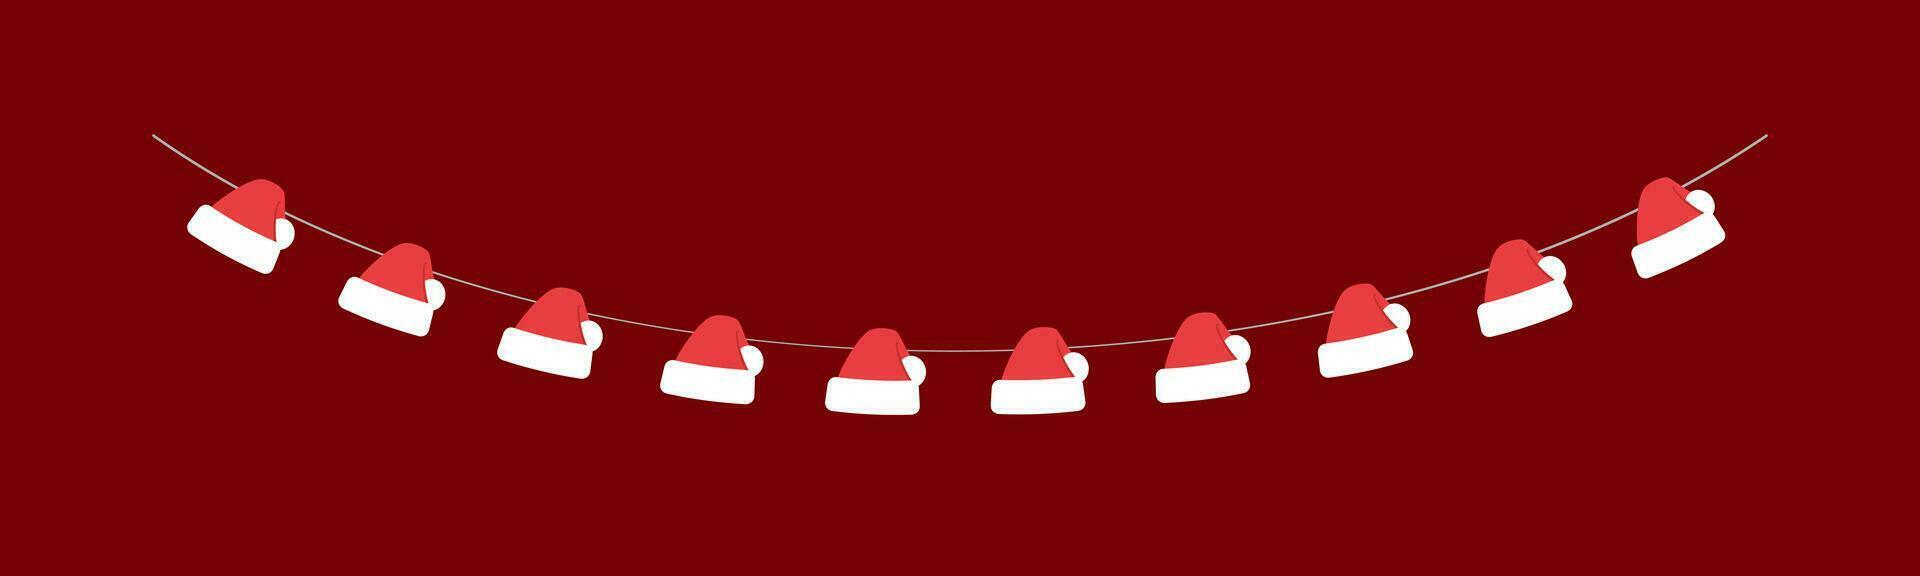 Christmas Santa Hat Vector Illustration, Christmas Graphics Festive Winter Holiday Season Bunting